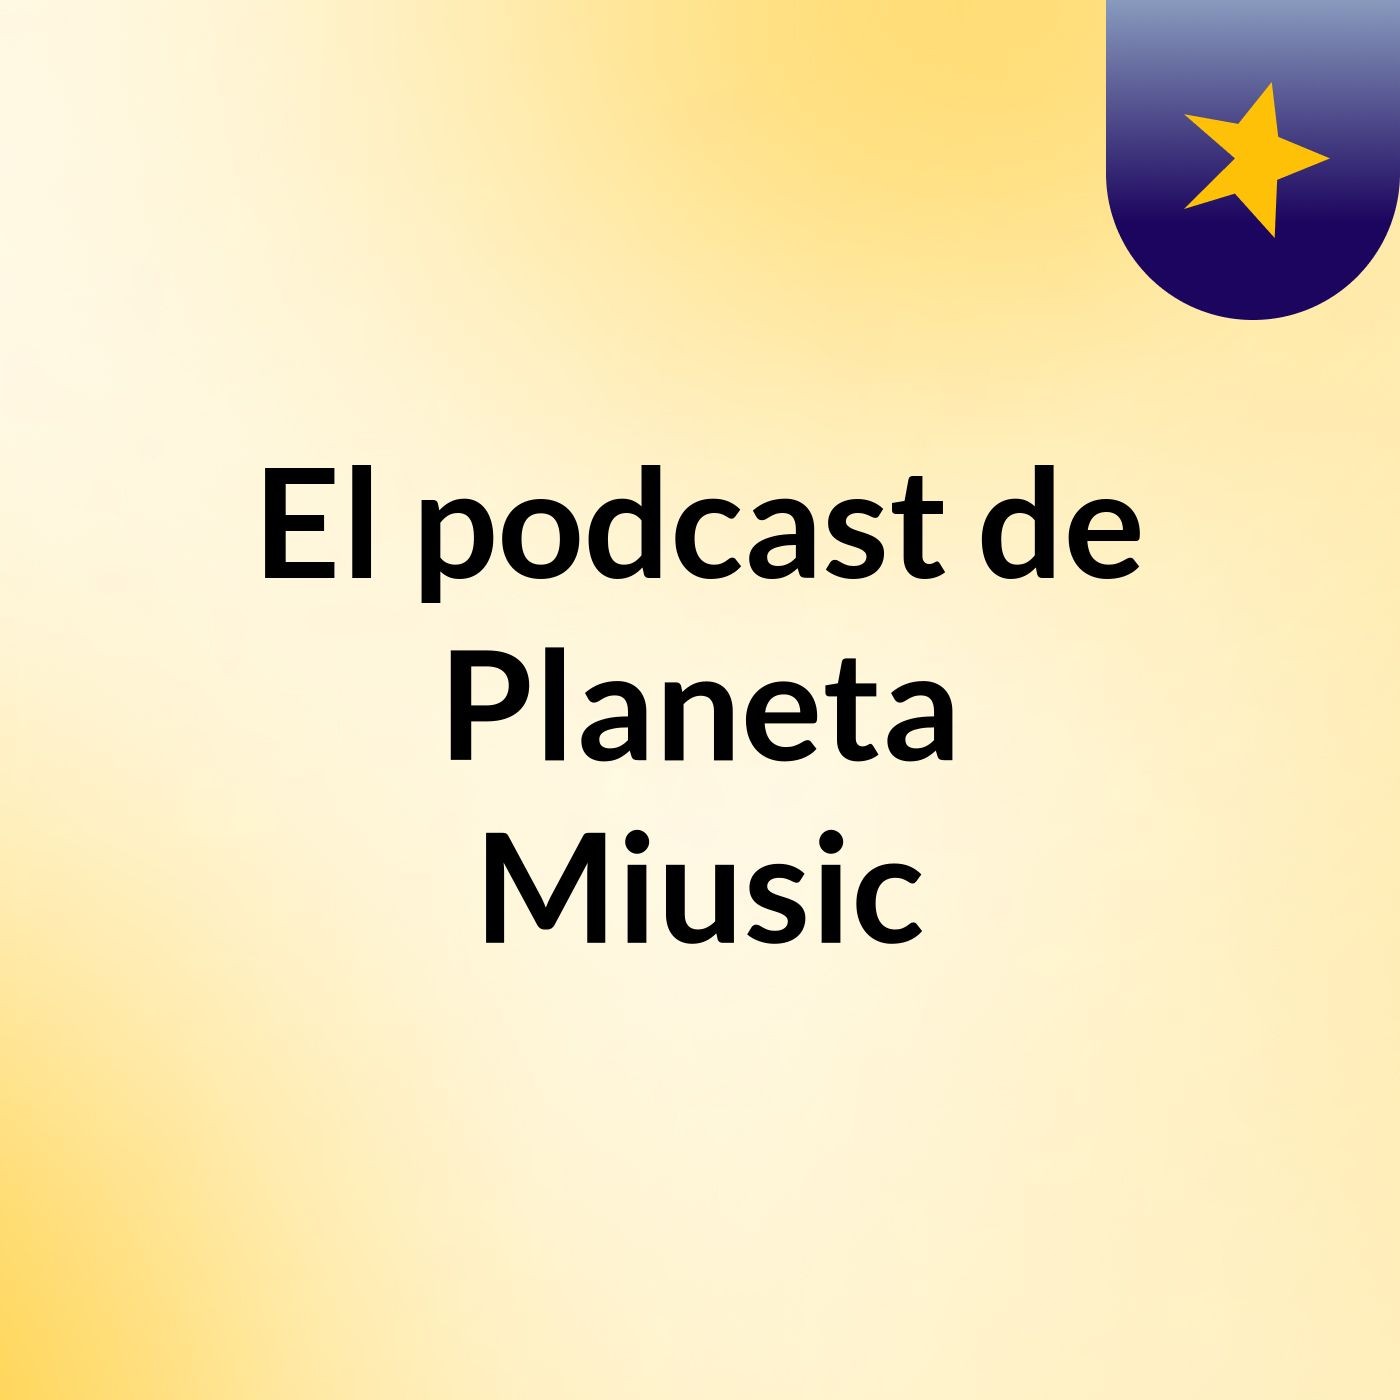 El podcast de Planeta Miusic